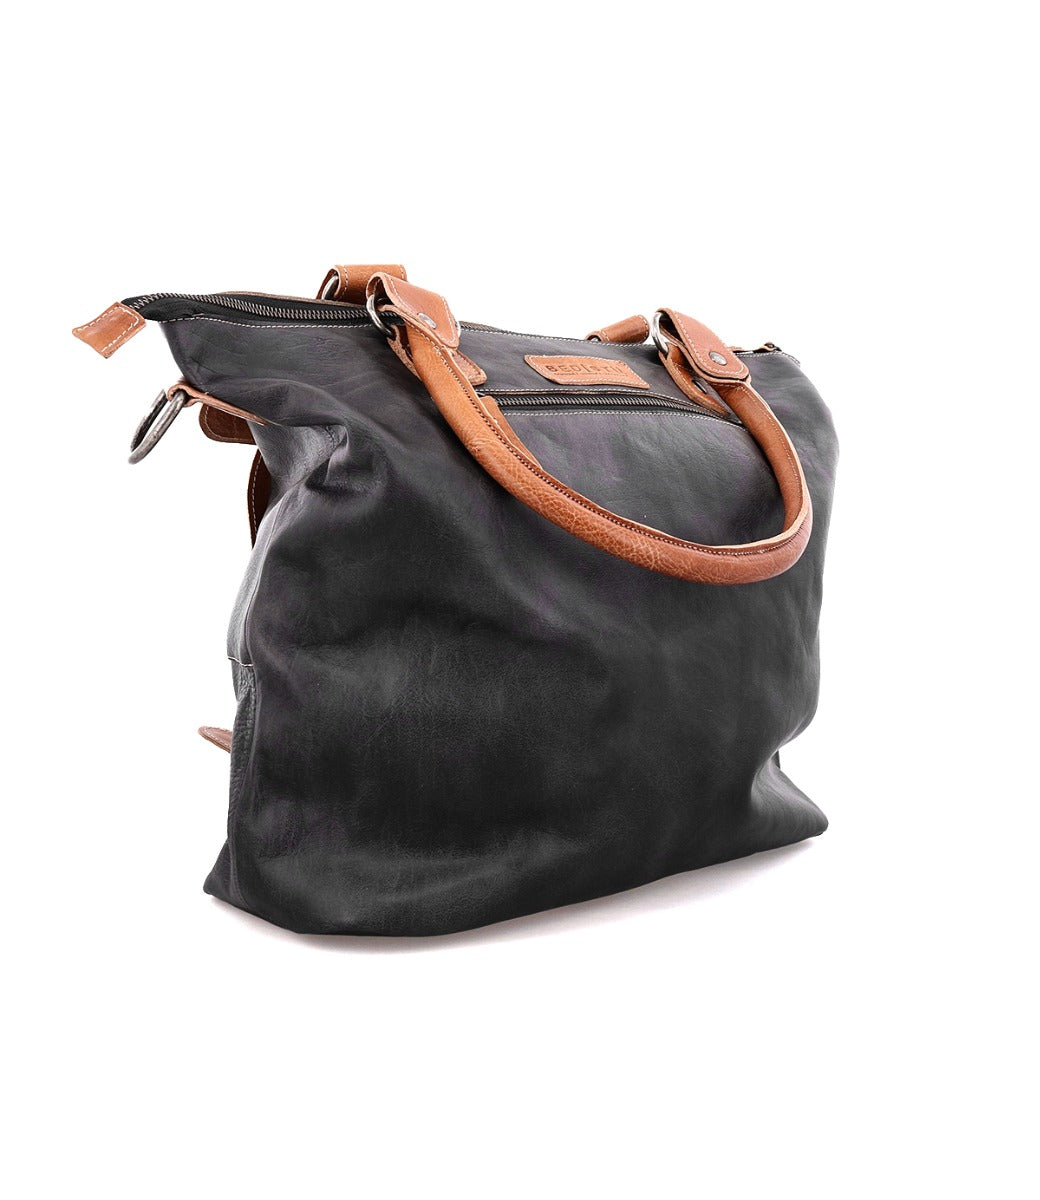 A Big Fork handbag by Bed Stu with tan handles.